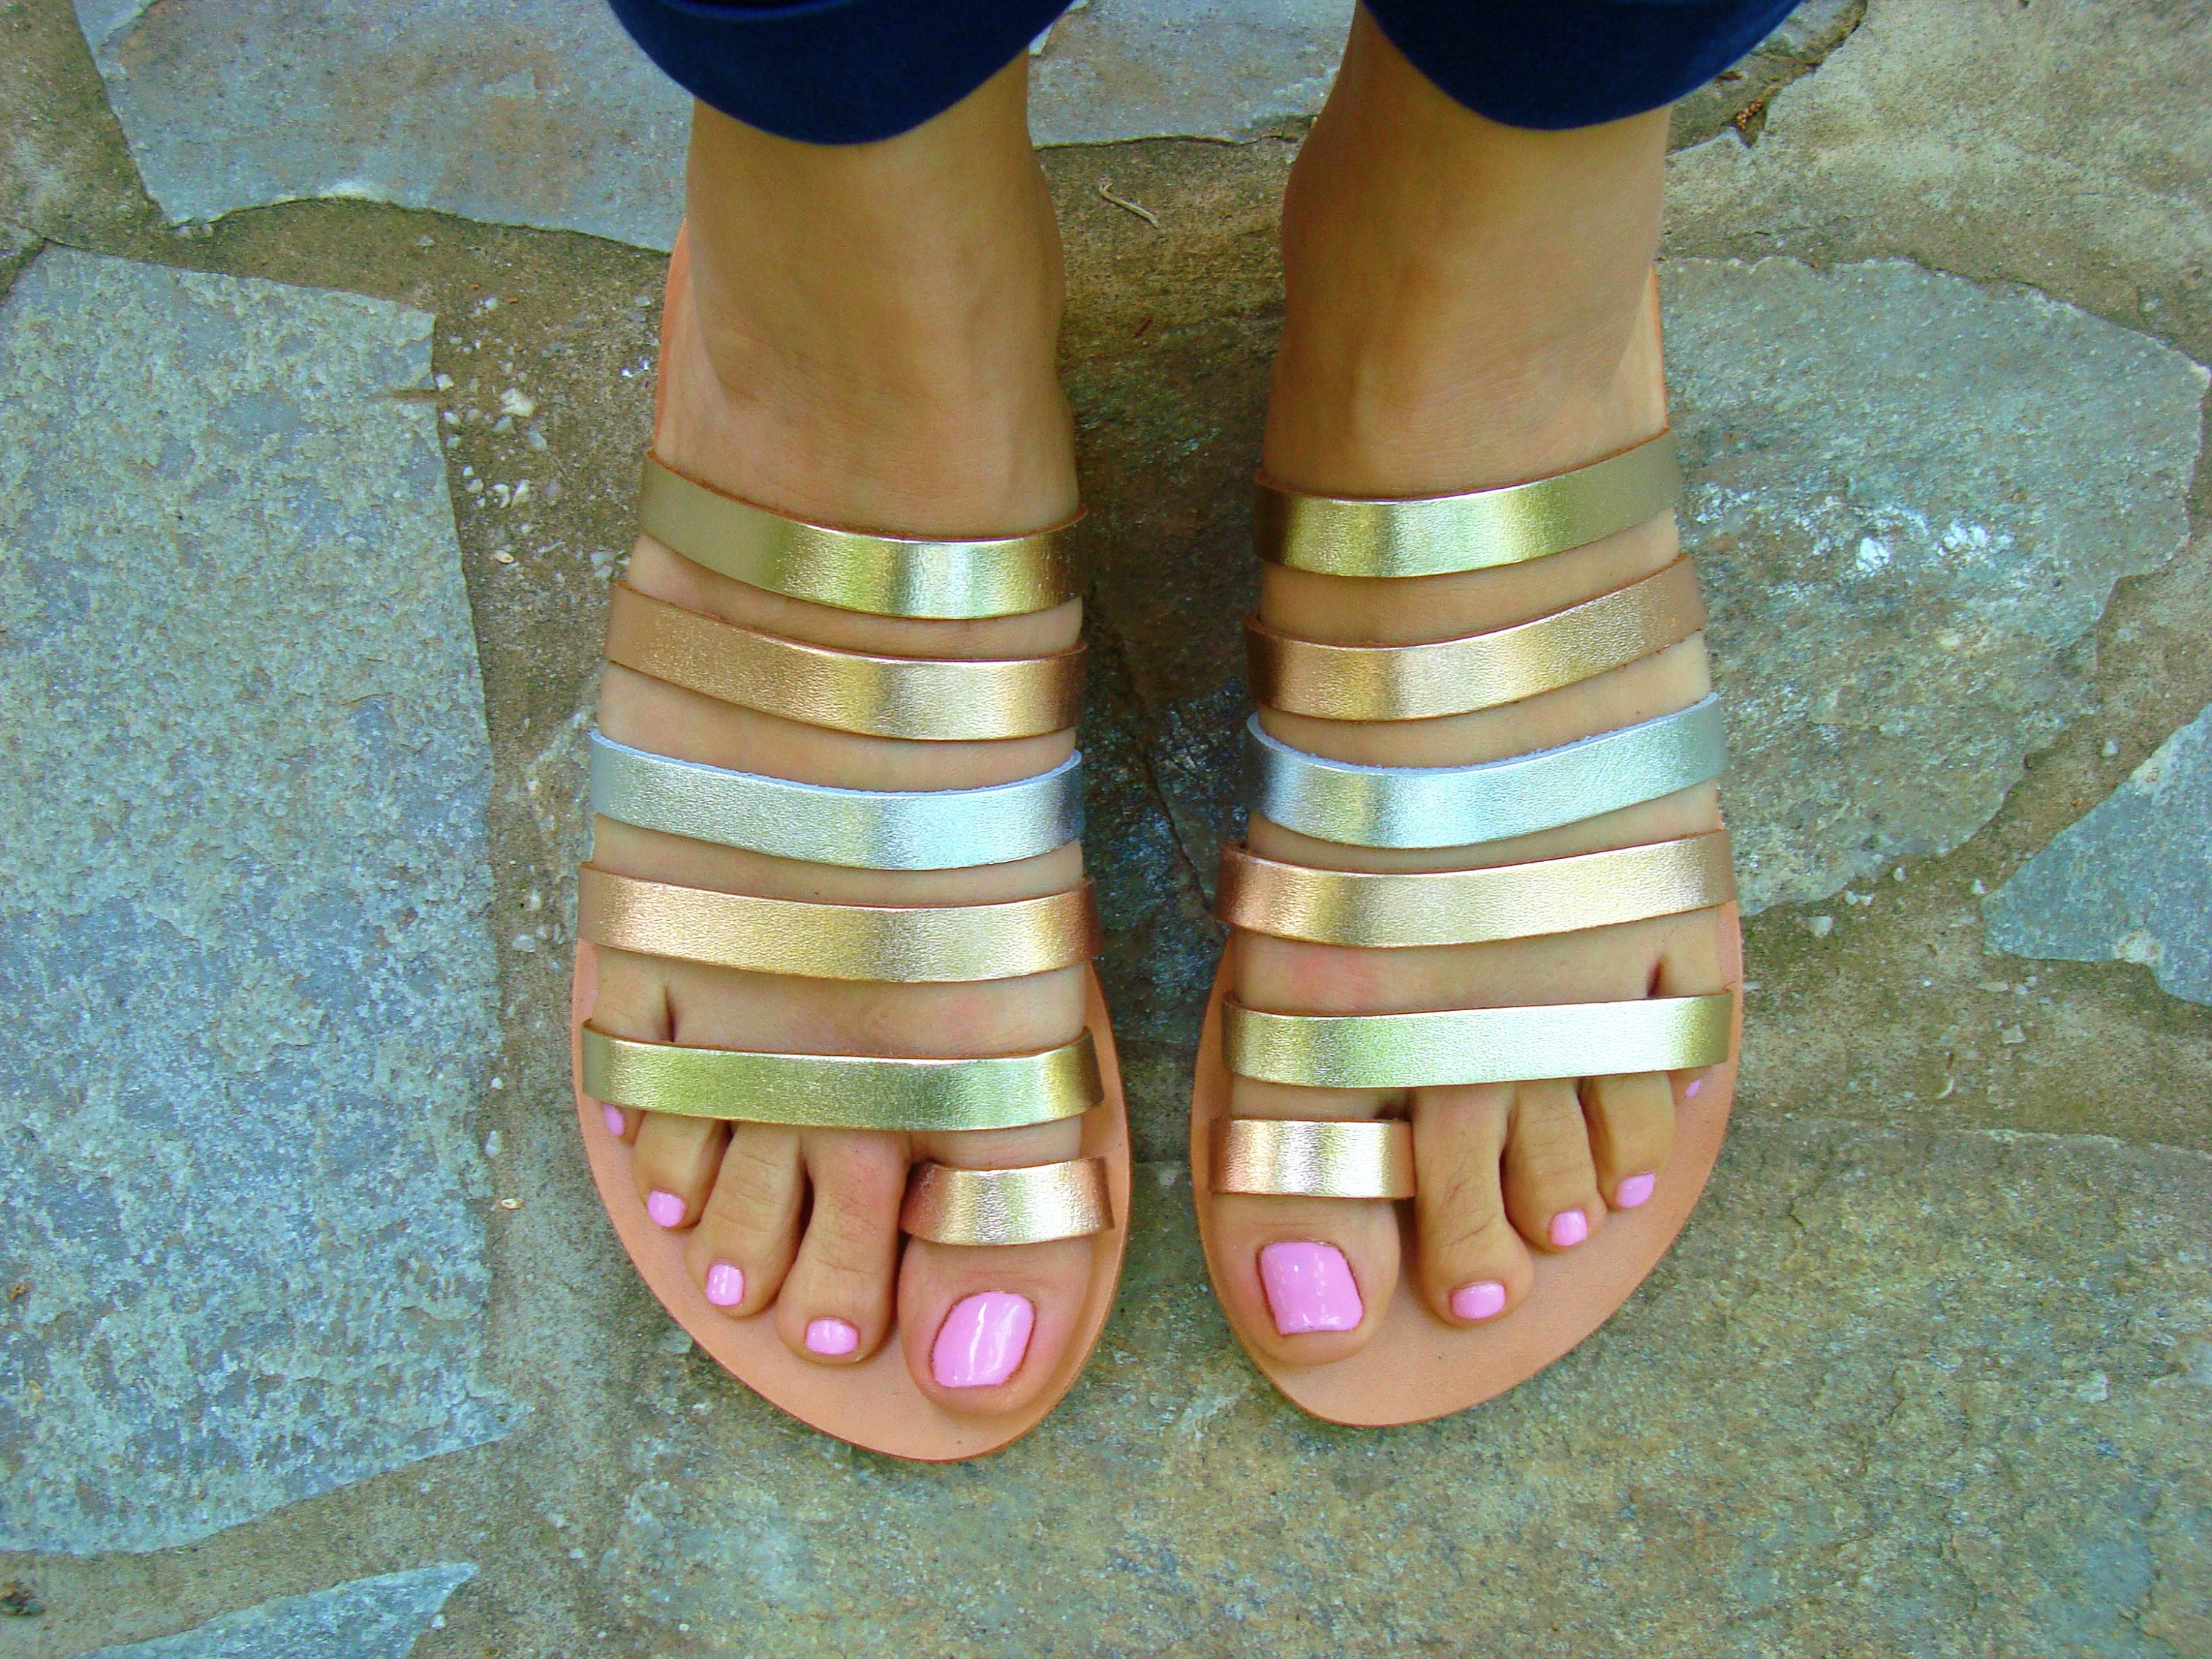 Dislocatie Artiest Op de grond Leather Toe Ring Sandals Rose Gold Sandals Gold Flats - Etsy